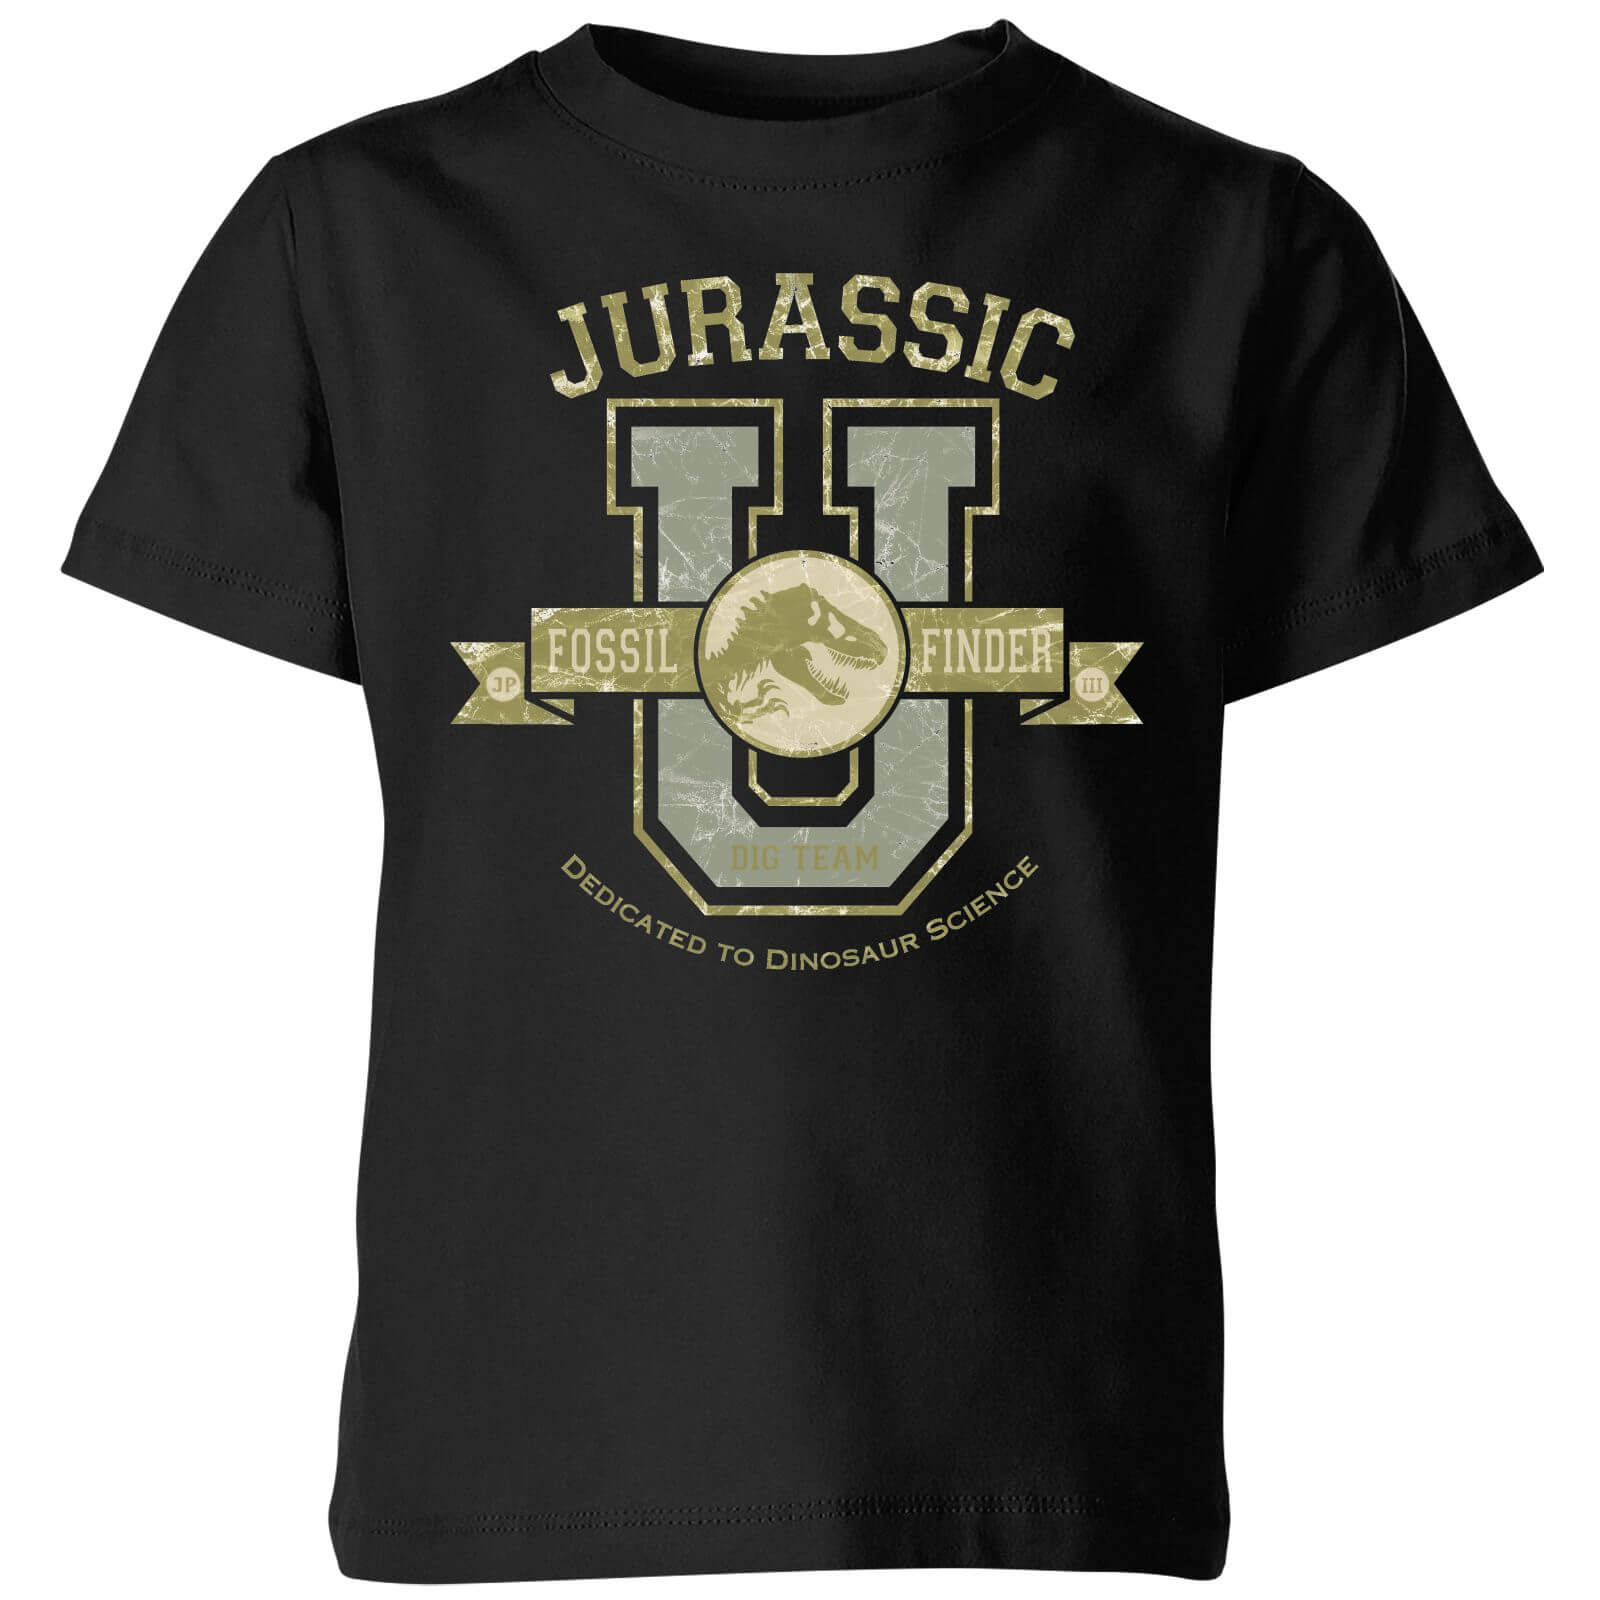 jurassic park fossil finder kids t-shirt